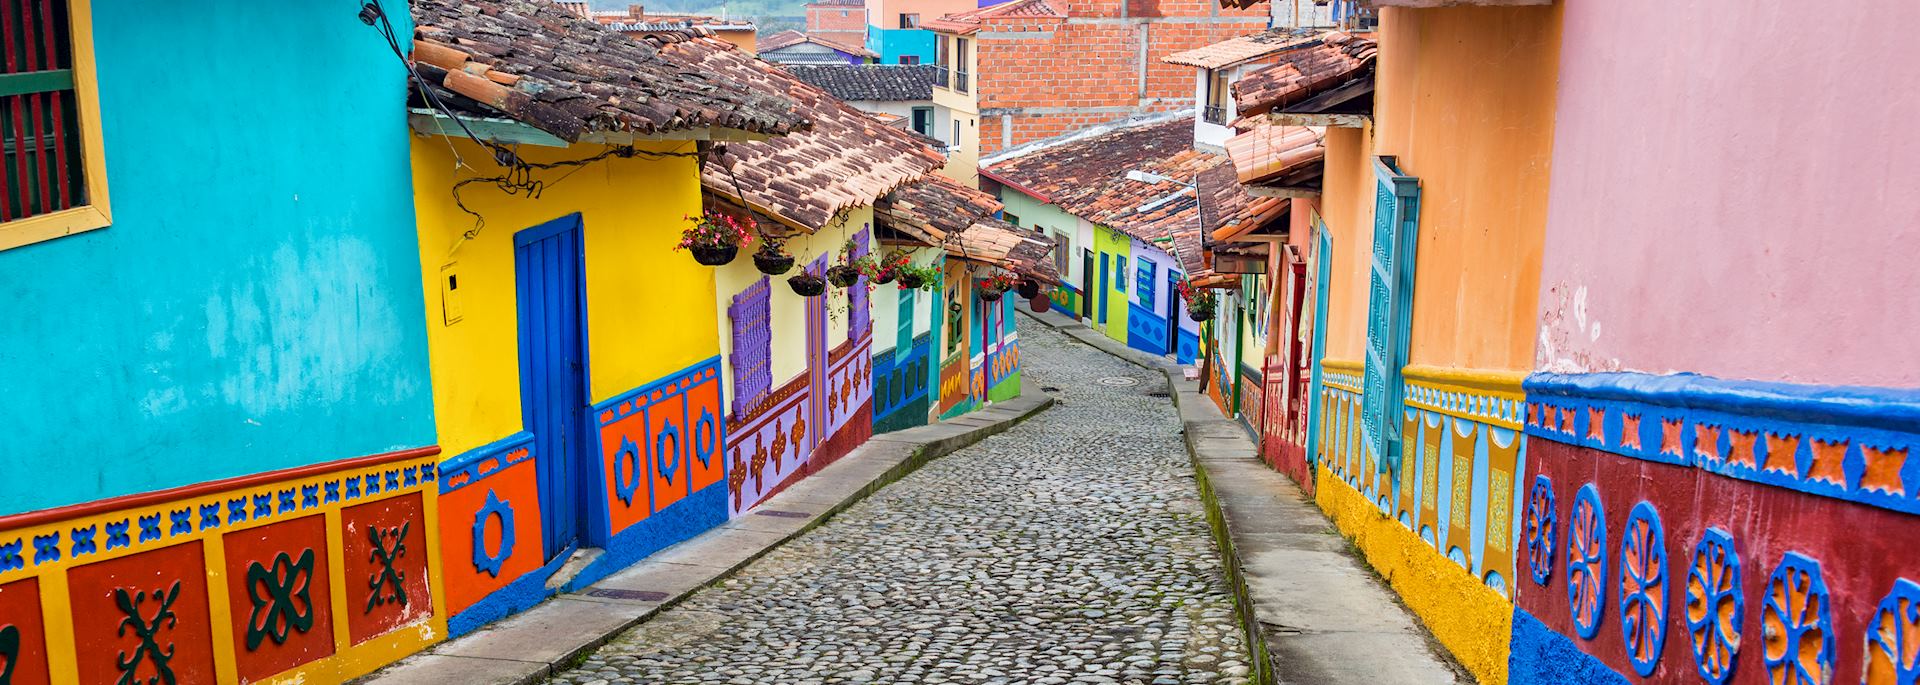 Colourful cobblestone street in Medellín